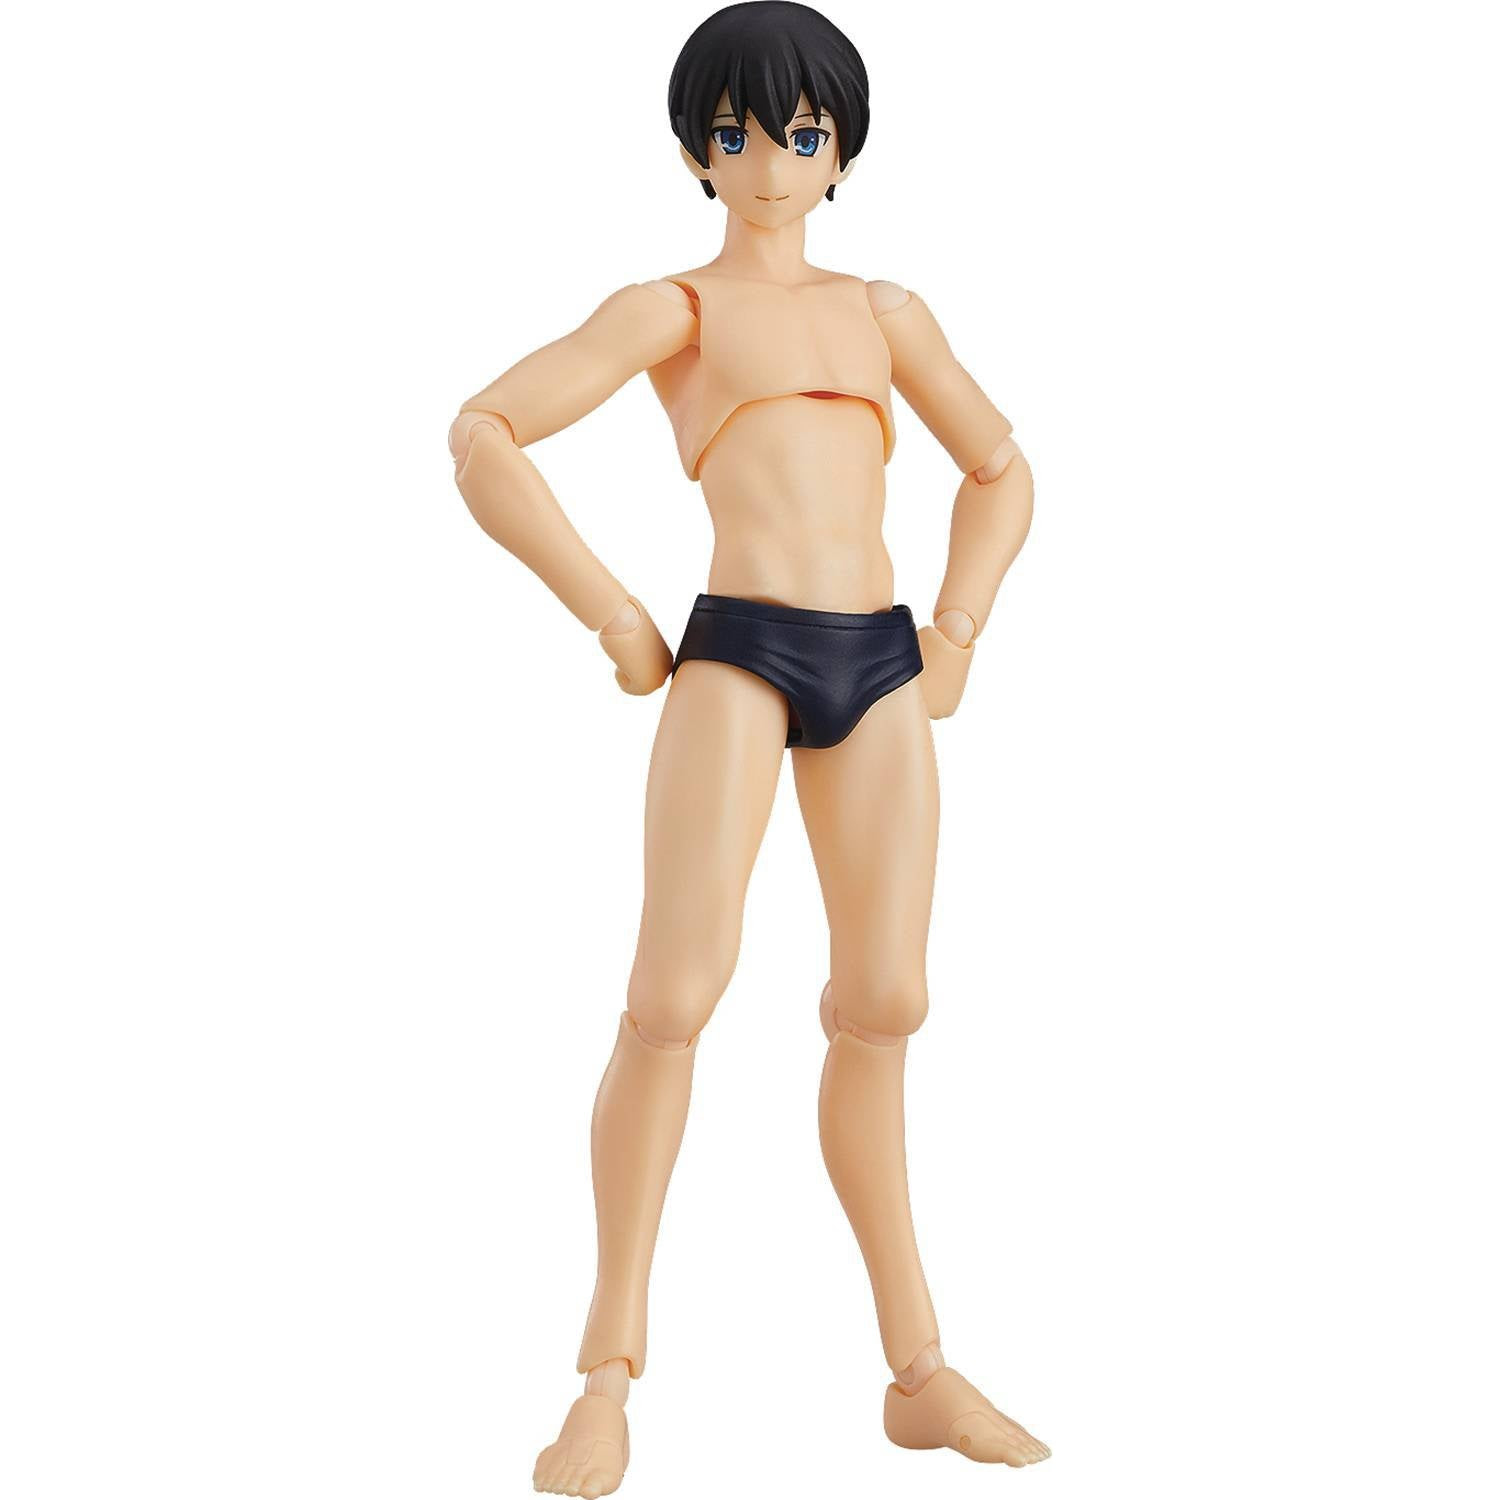 Image of Male figma No.452 Swimsuit Body (Ryo) Type 2 - MAY 2020